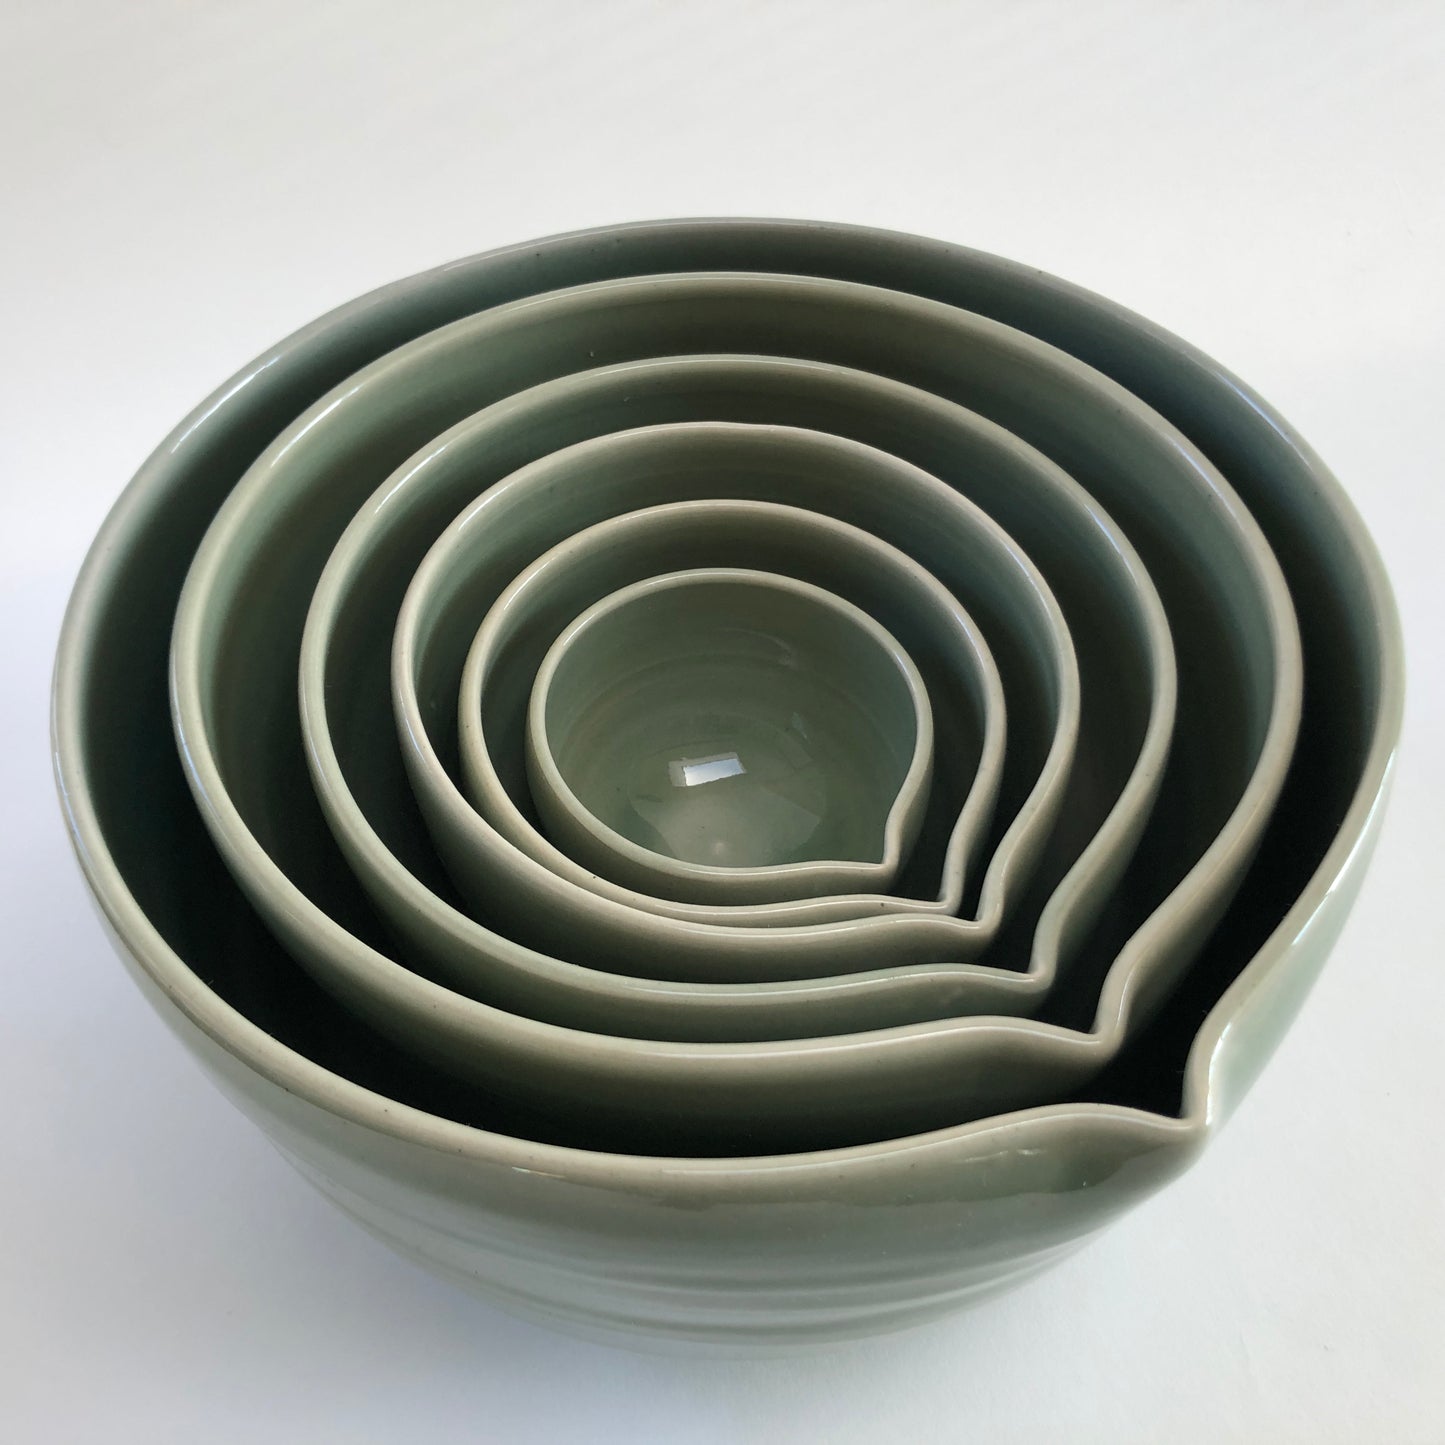 Six Piece Nesting Set of Bowls (Celadon)